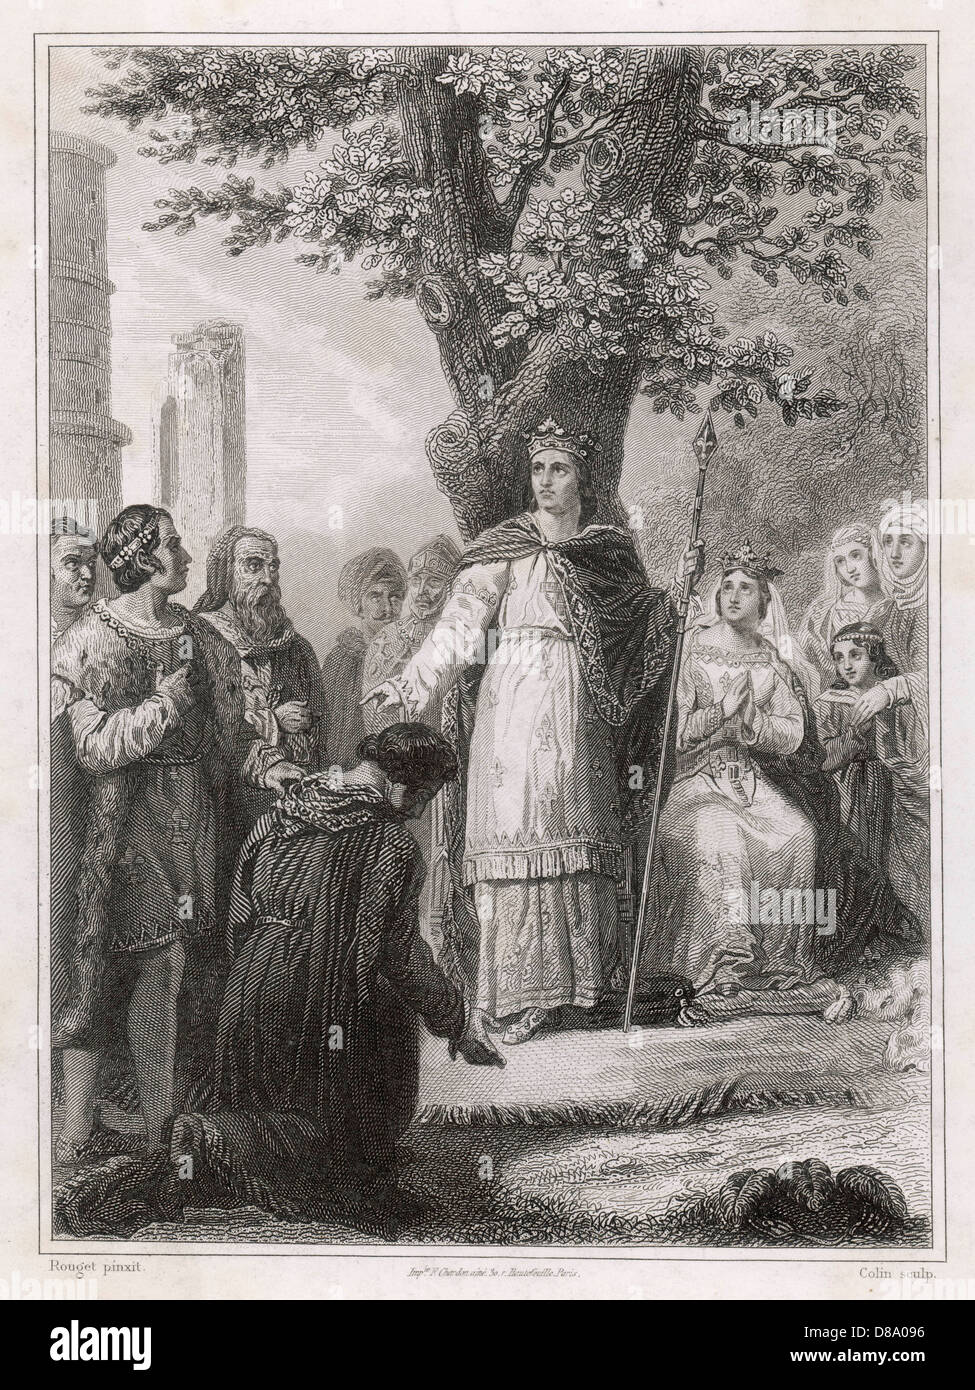 St. Louis IX, King of France Print - Portraits of Saints